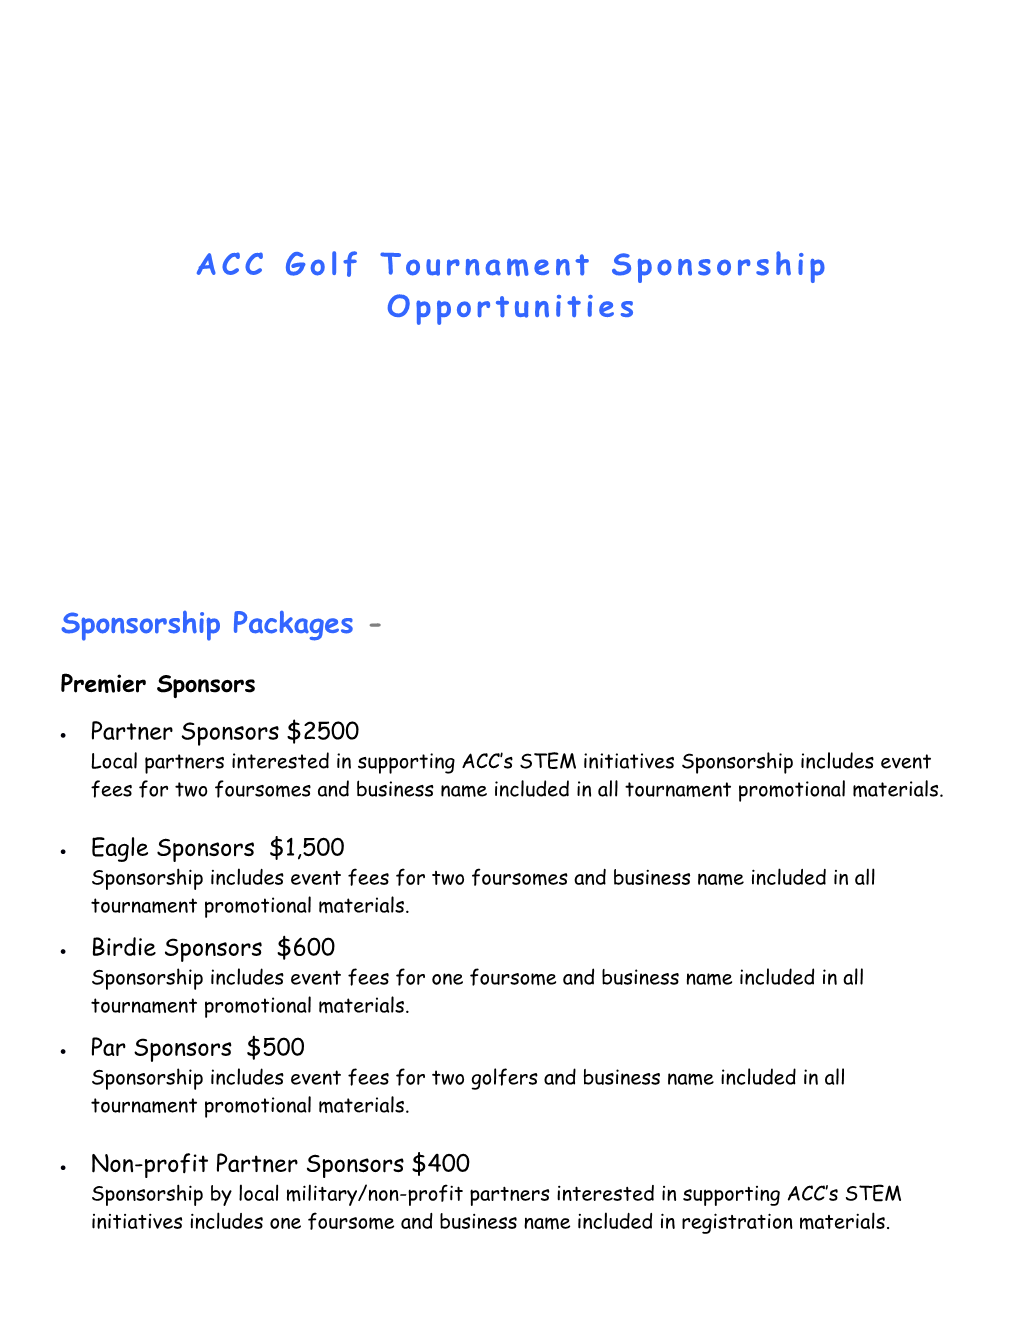 ACC Golf Tournament Sponsorship Opportunities